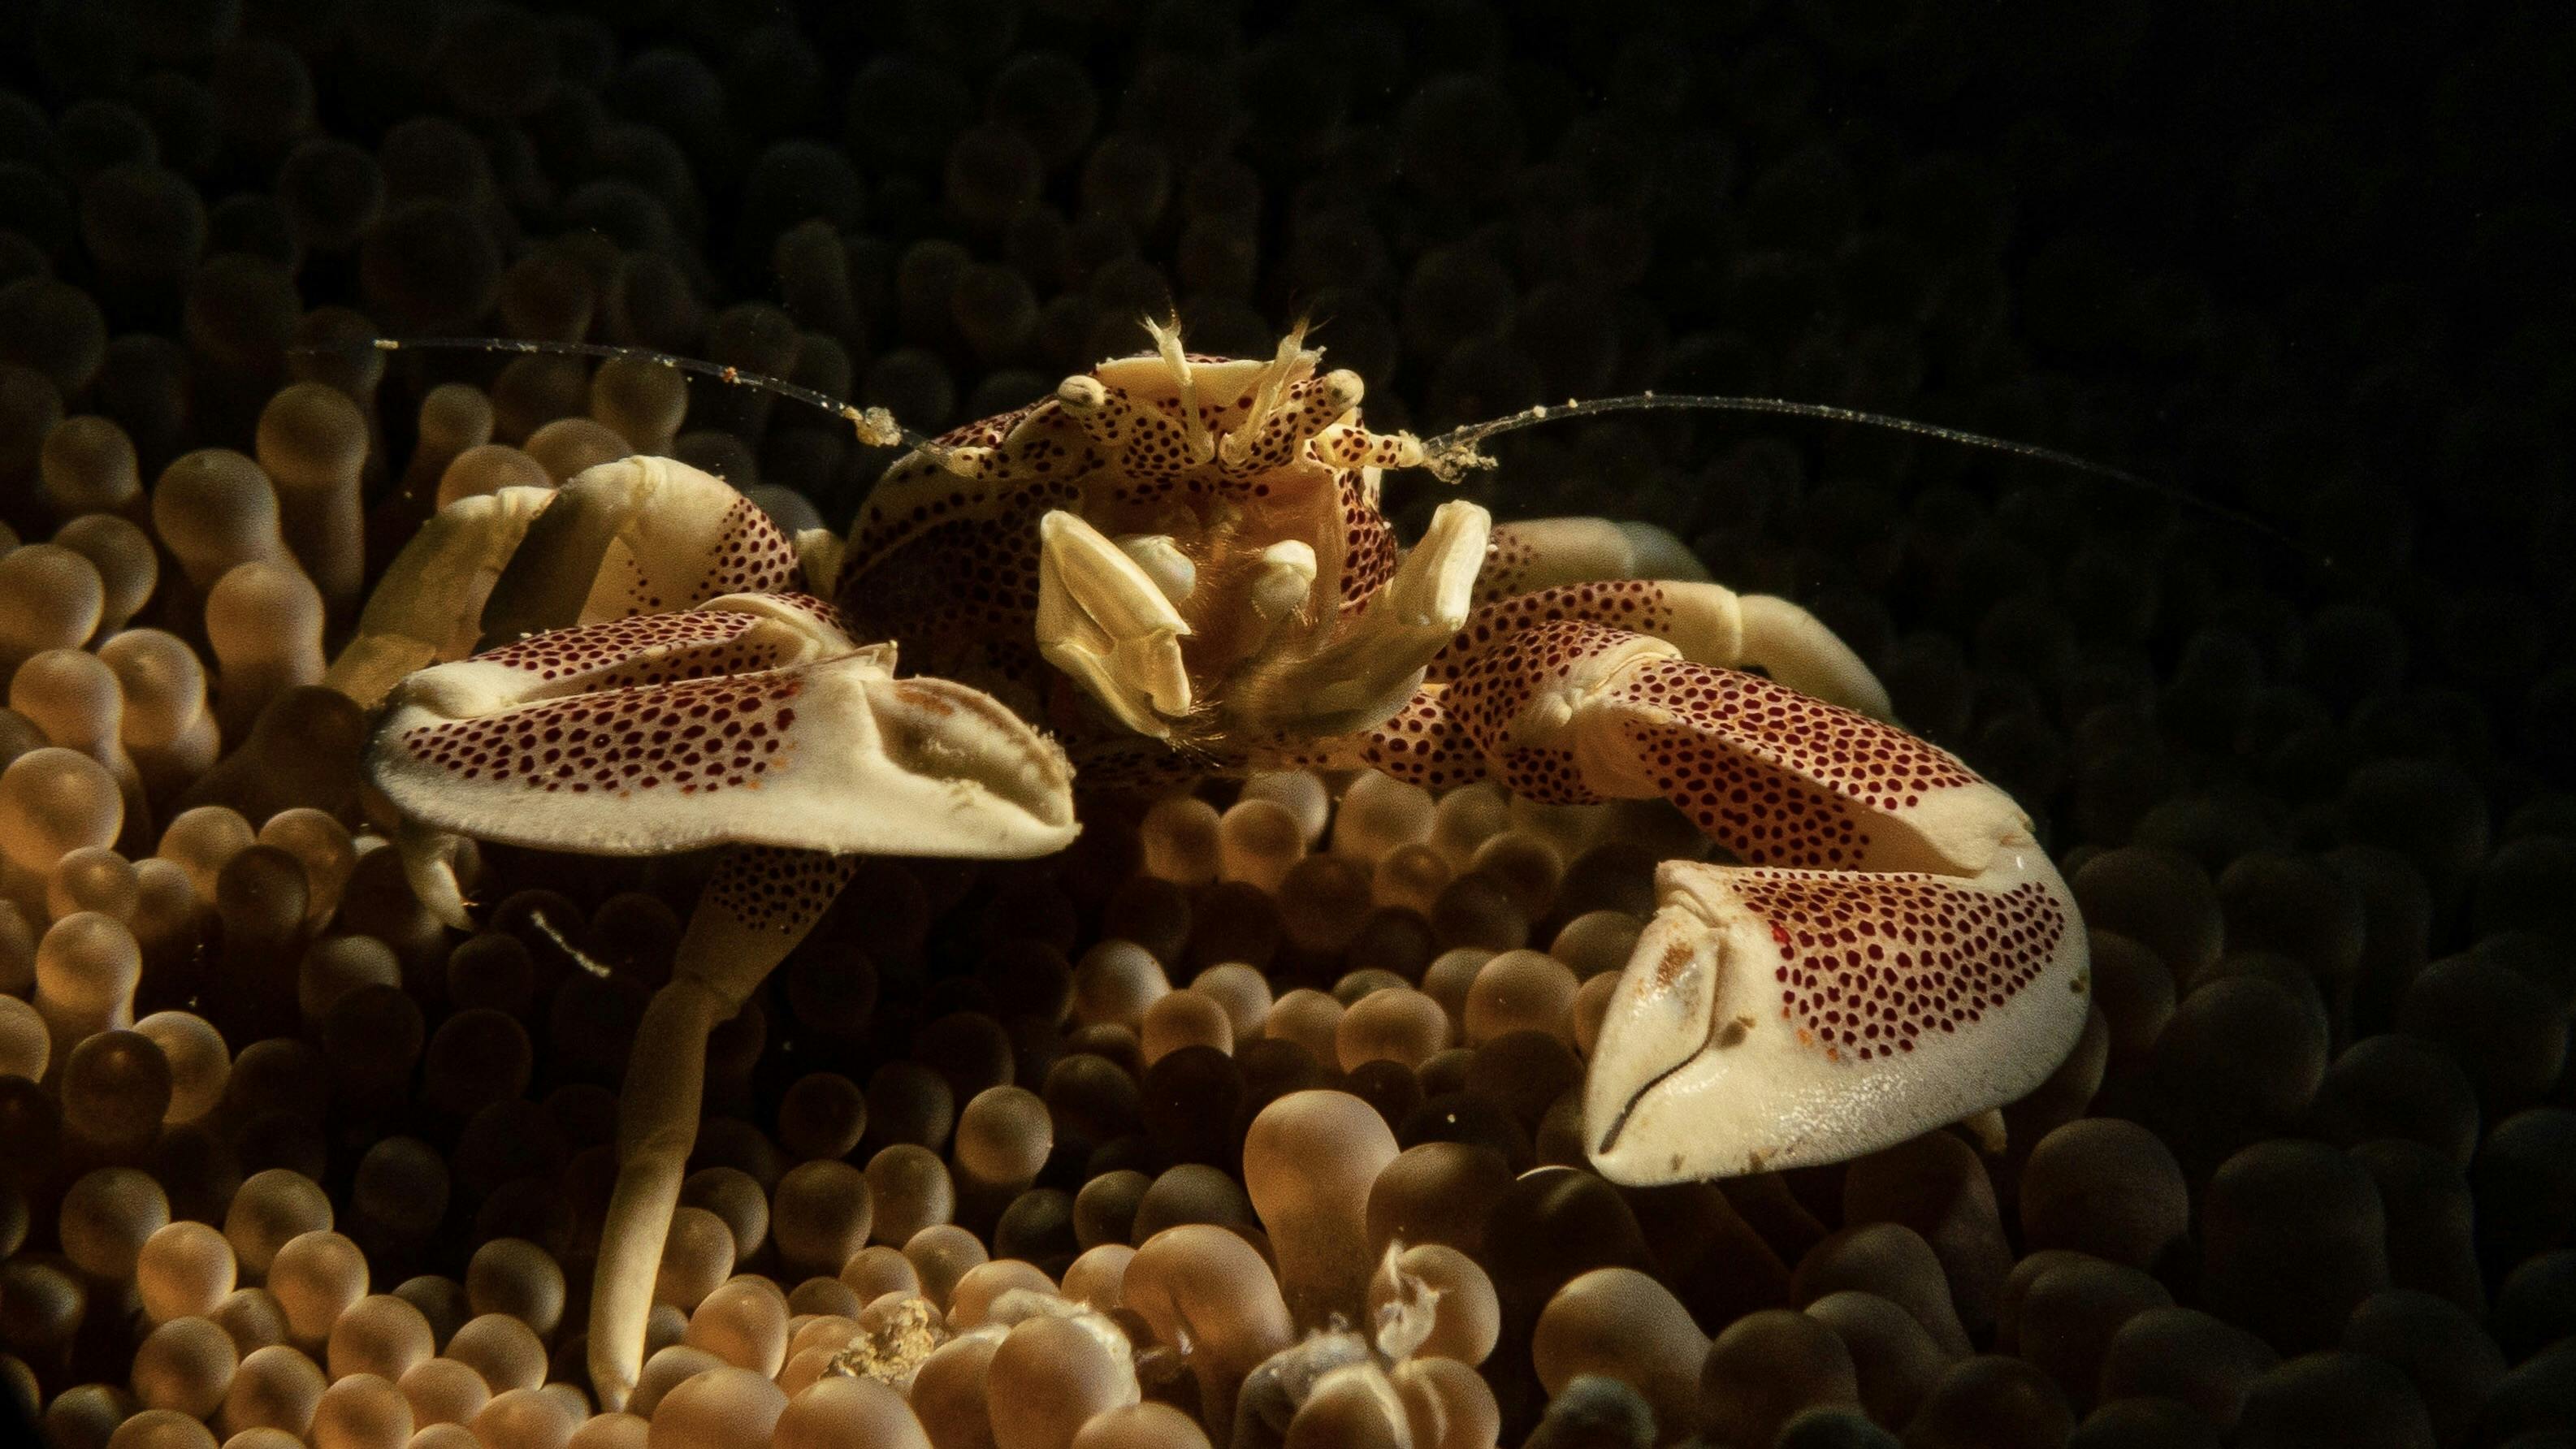 Anemone Crab in the Baring Marine Sanctuary, Lapu-Lapu City